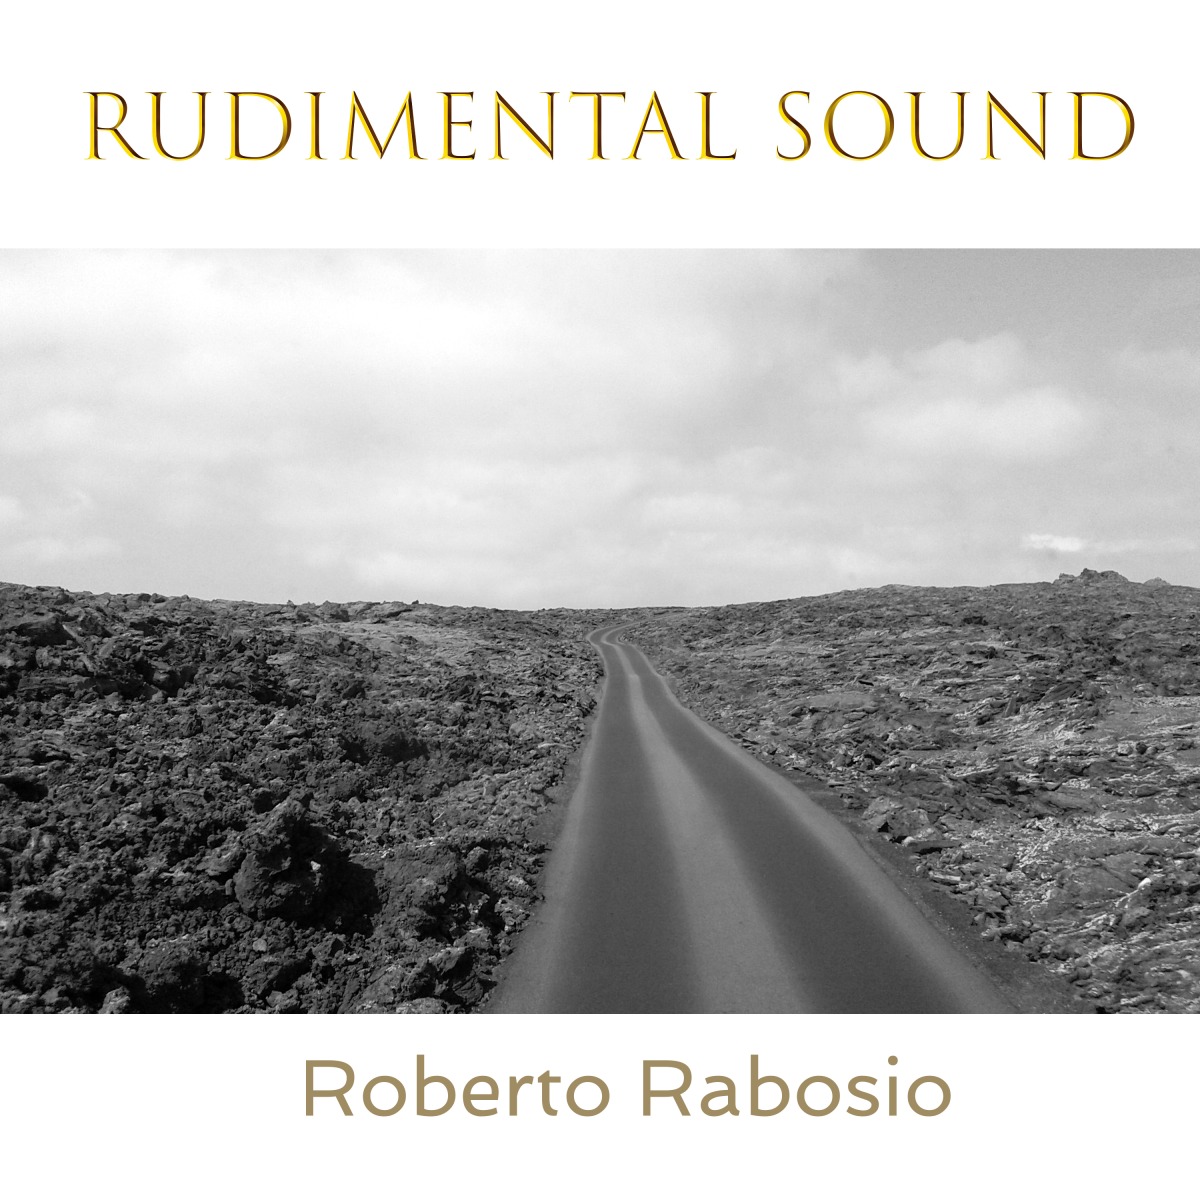 Rudimental Sound by Roberto Rabosio / June 2020